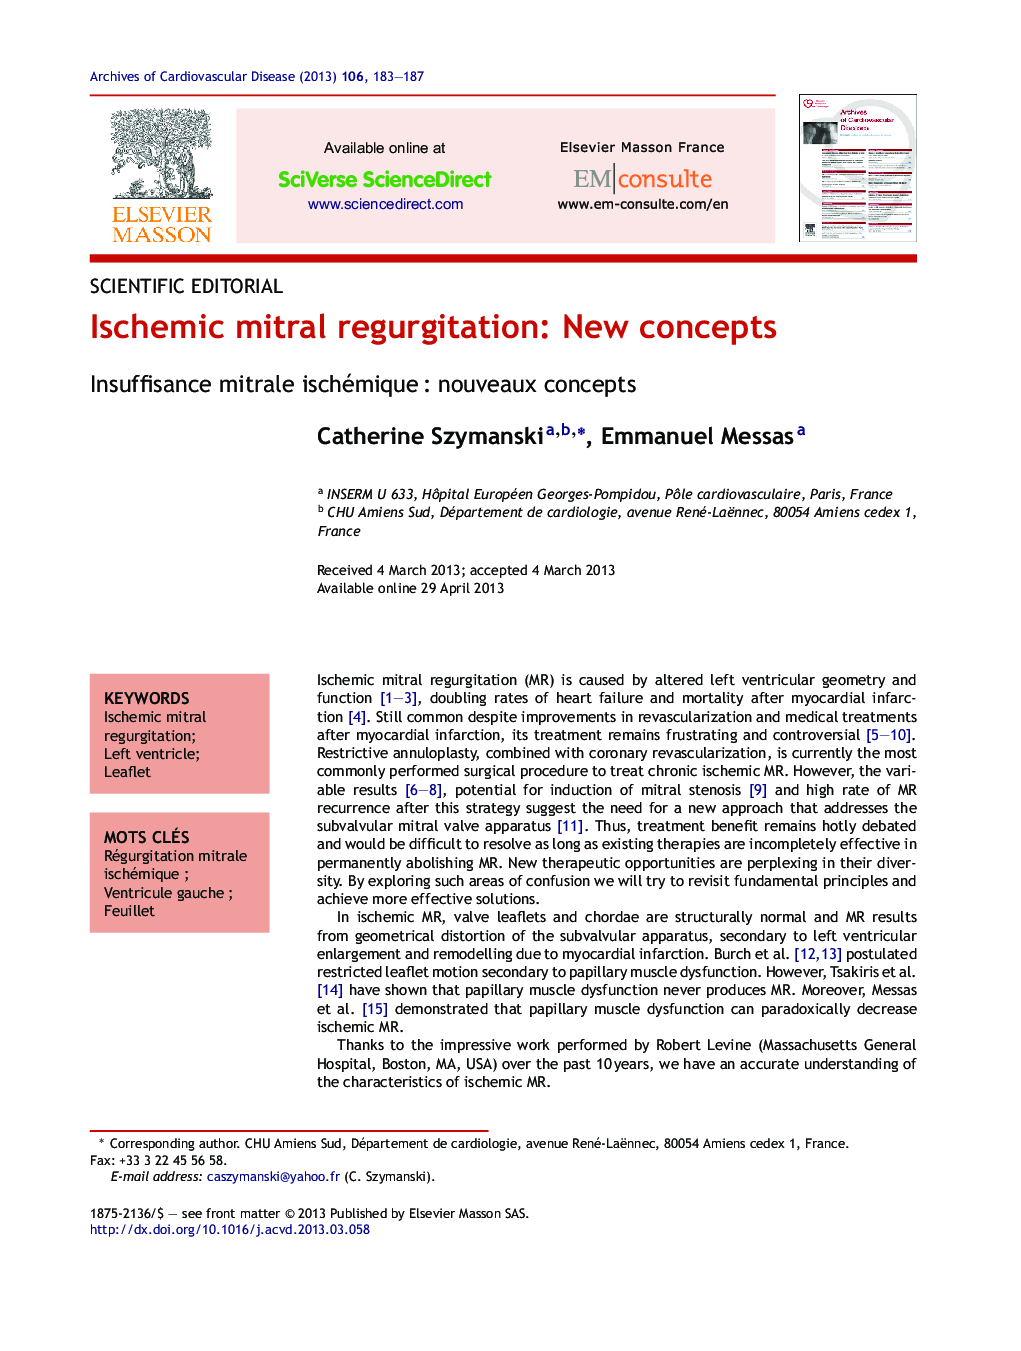 Ischemic mitral regurgitation: New concepts